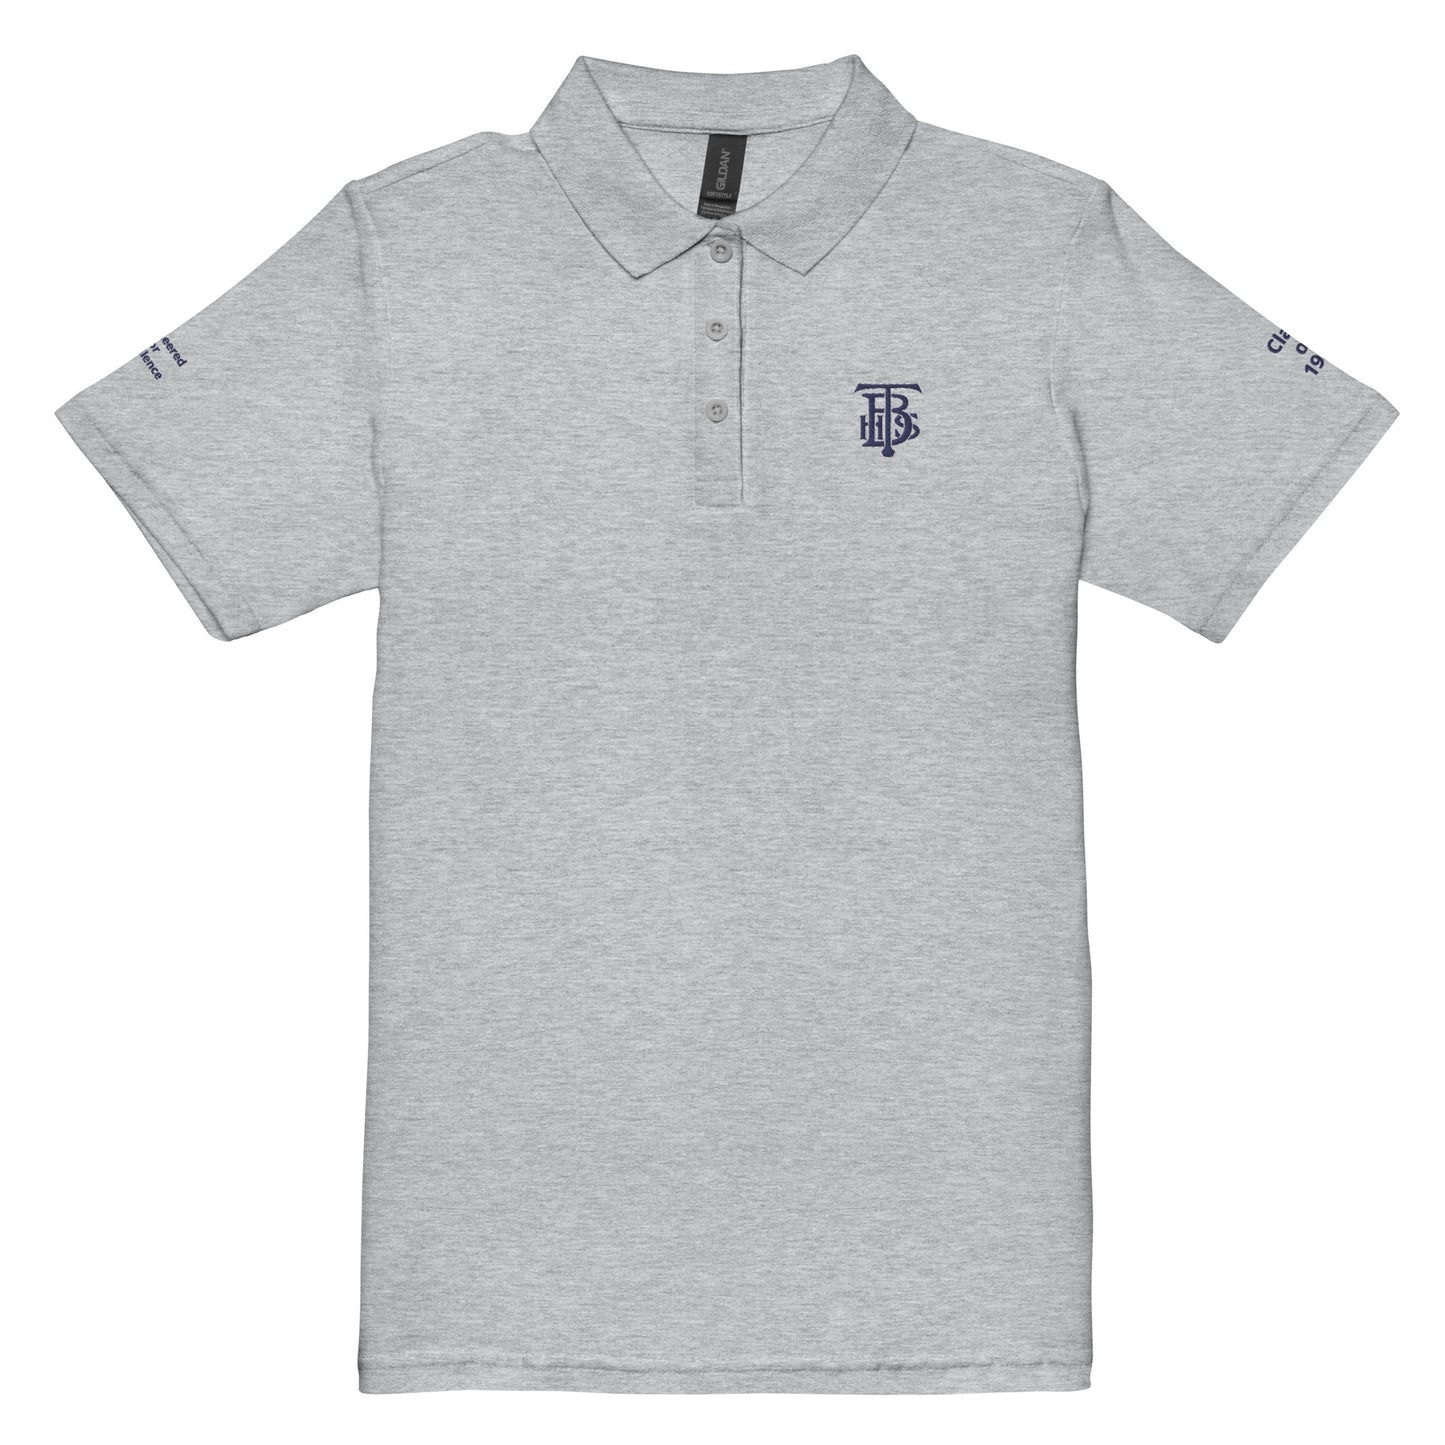 Embroidered Women’s Pique Polo Shirt - Class Of 1985 - Grey